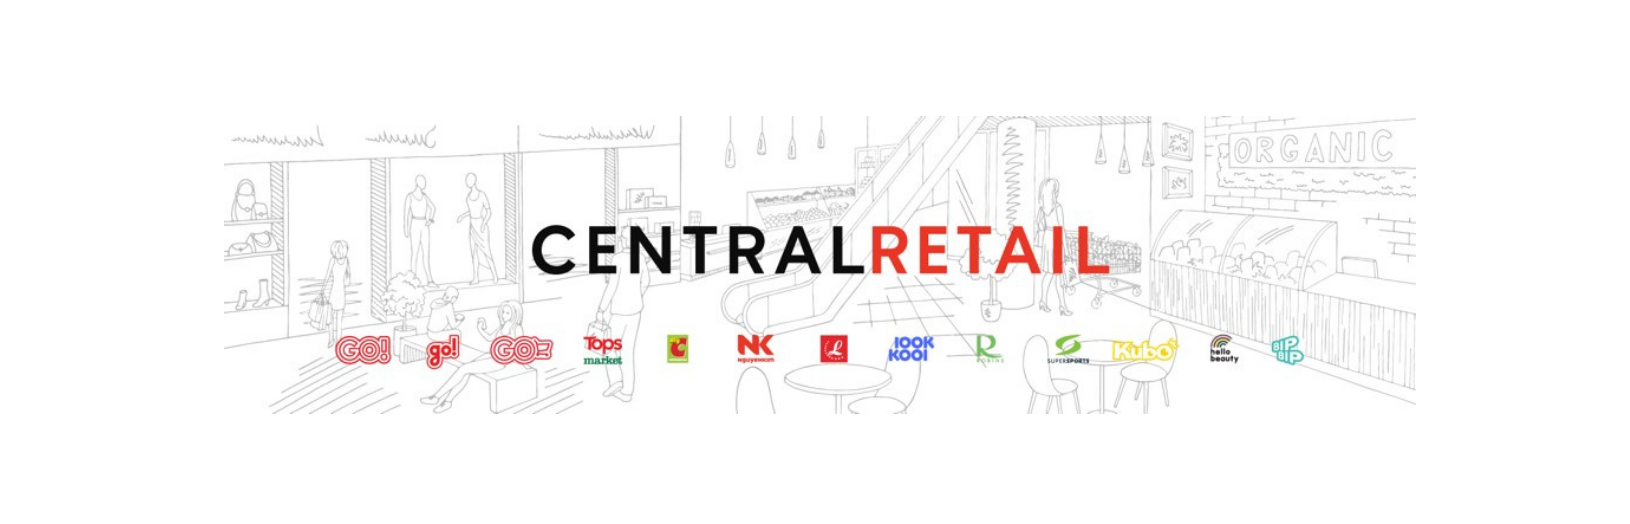 Tập đoàn Central Retail Việt Nam - Supermarket